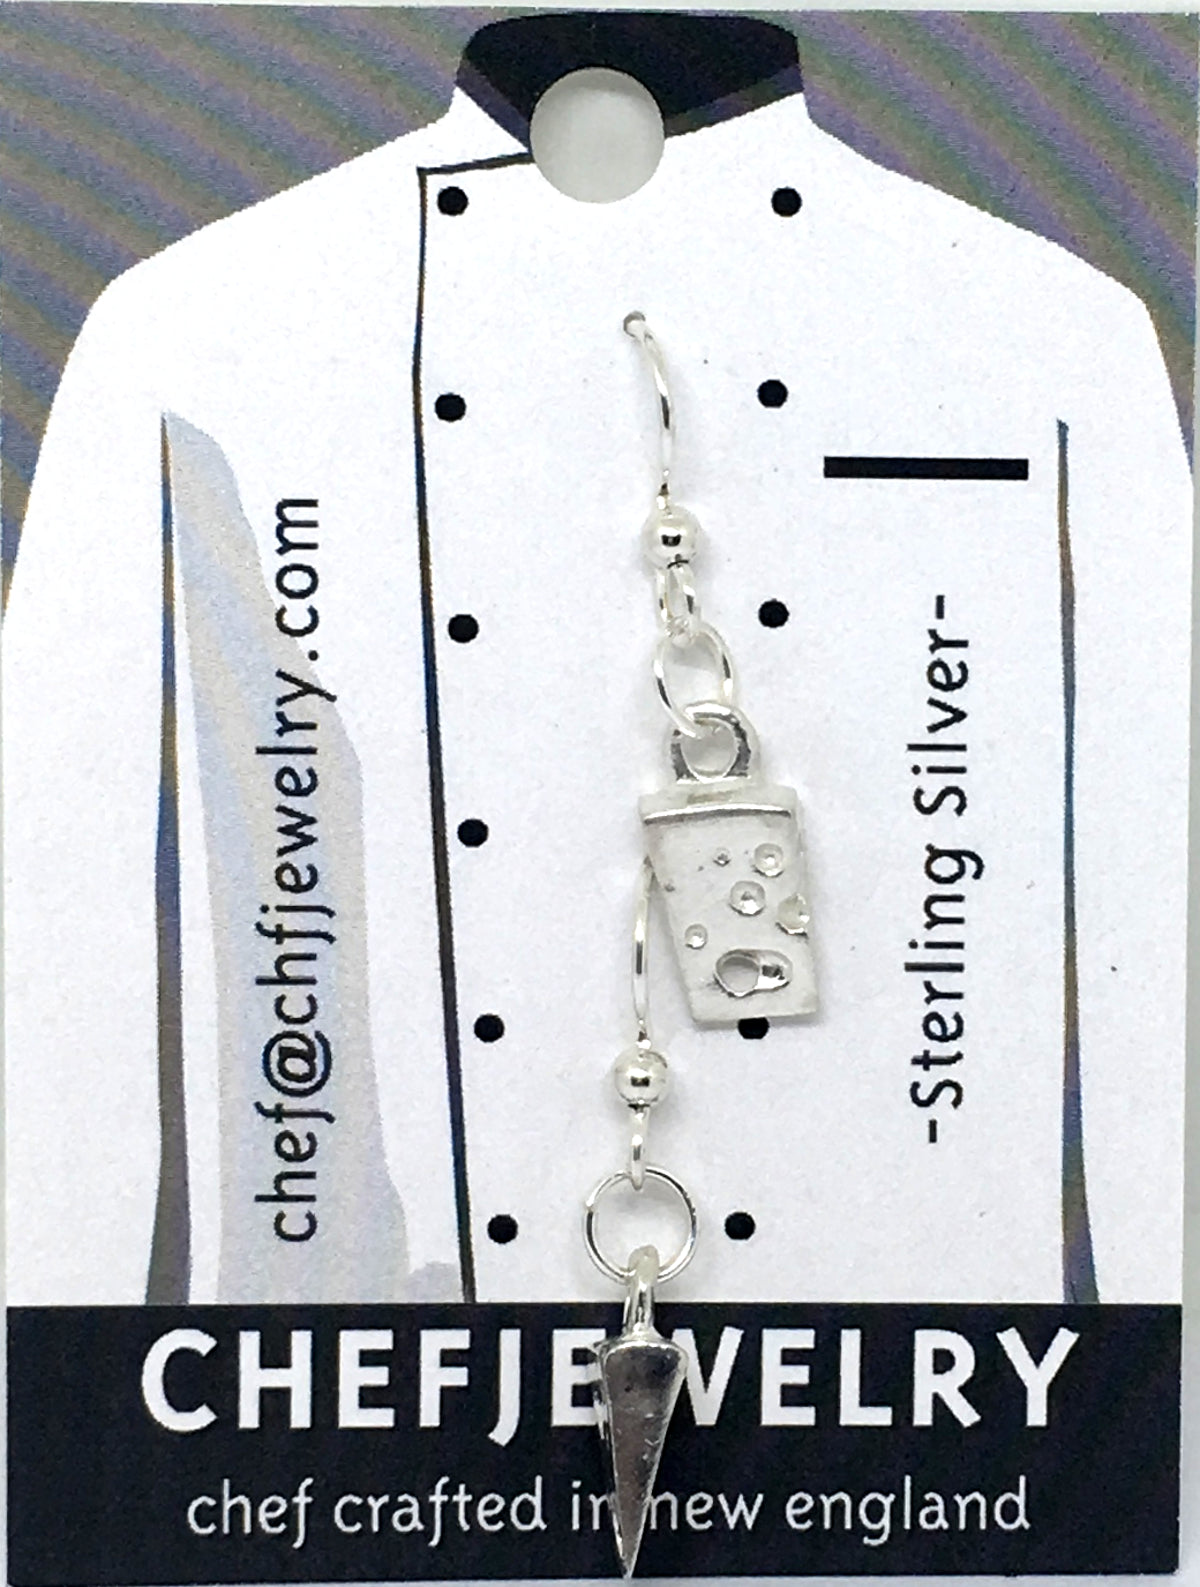 cheese earrings come on a custom chefjewelry earring card